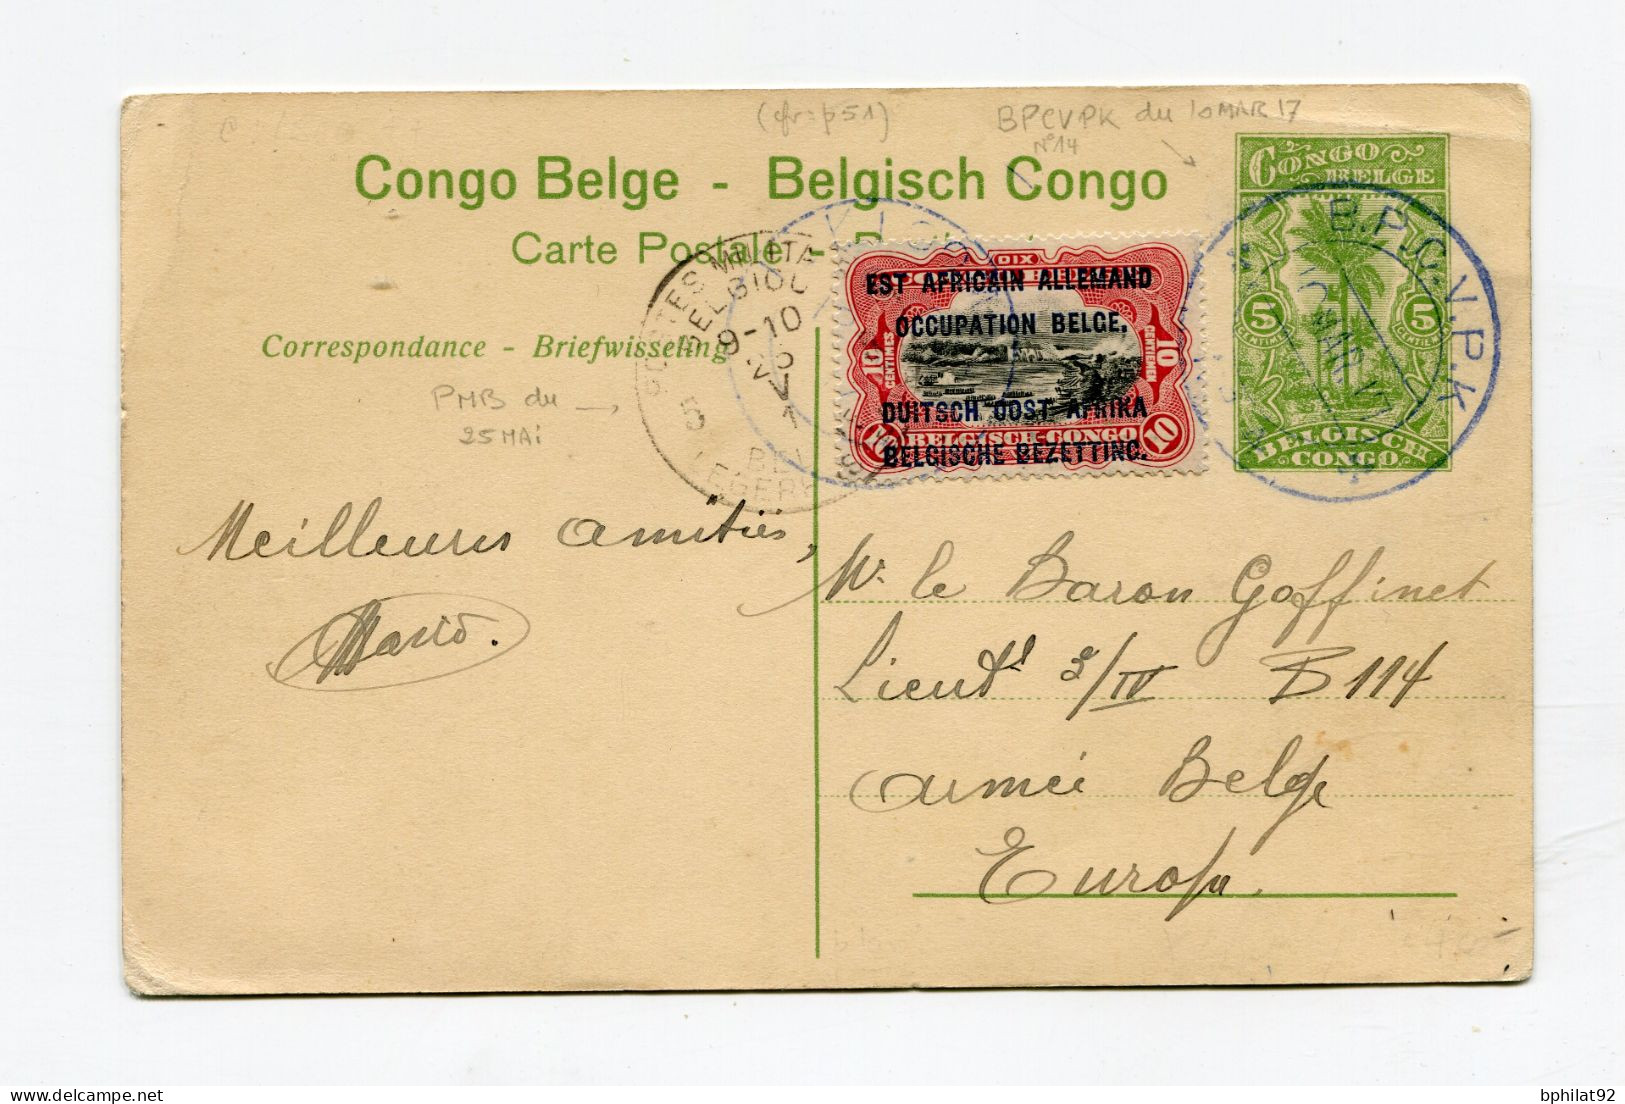 !!! ENTIER POSTAL DU CONGO BELGE, CACHET BPCVPK DE 1917 - Briefe U. Dokumente